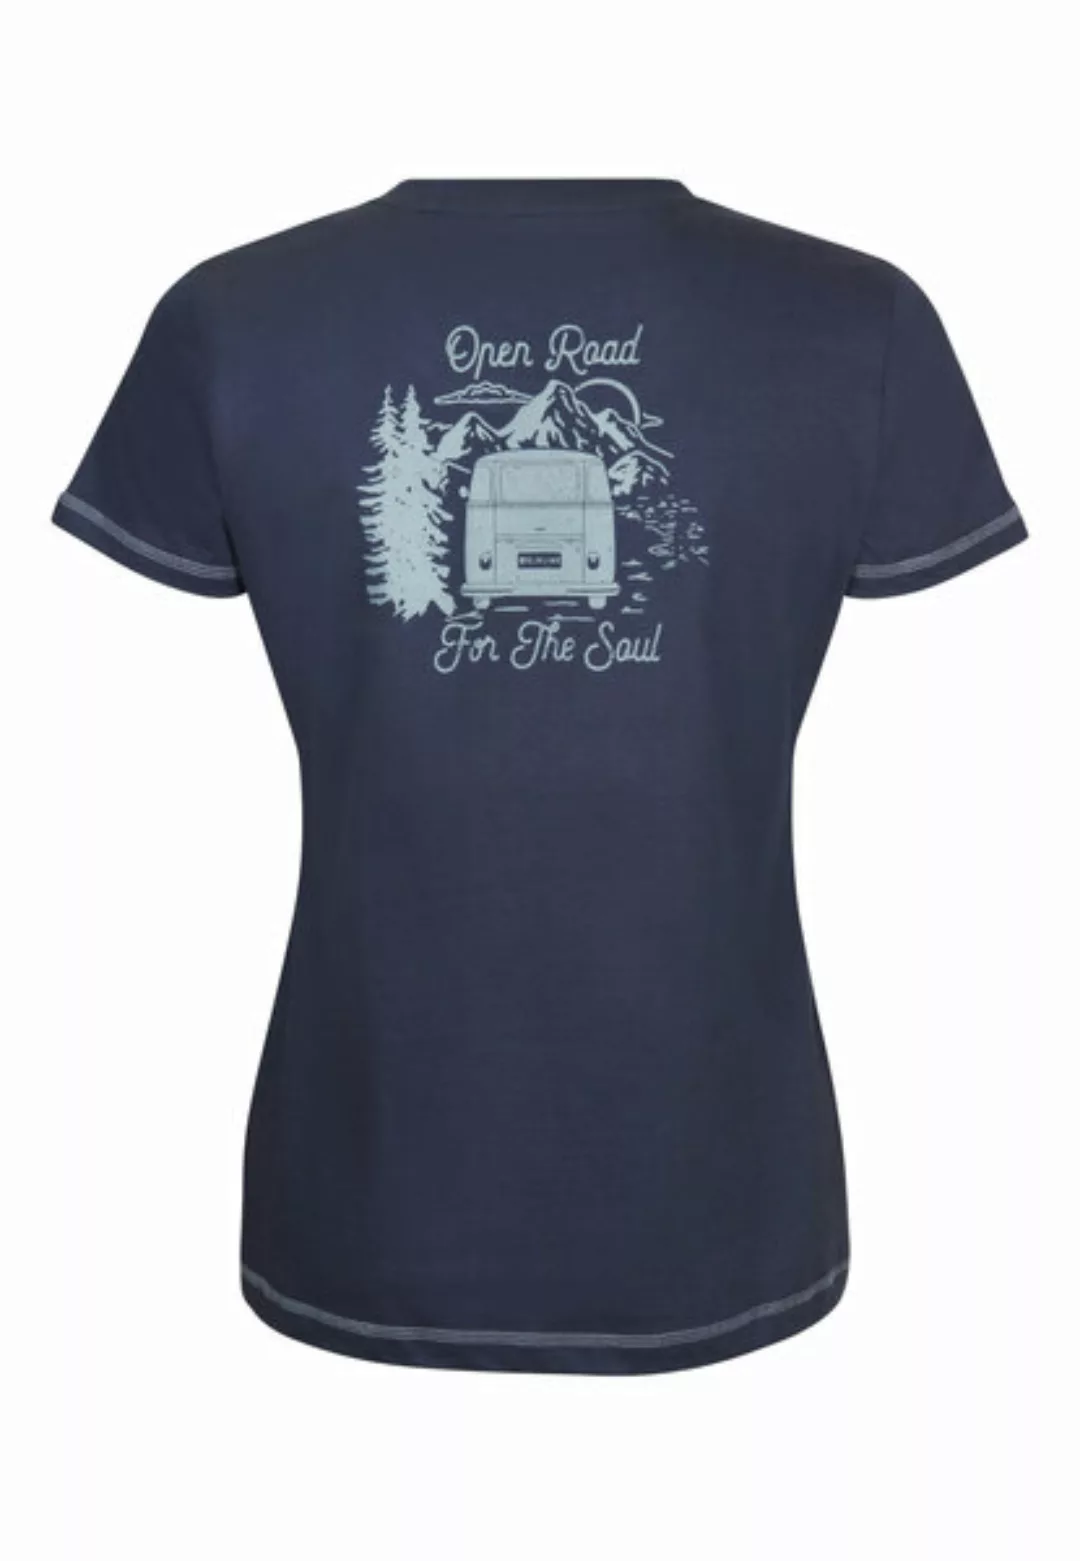 Damen T-shirt Vw-bulli Open Road günstig online kaufen